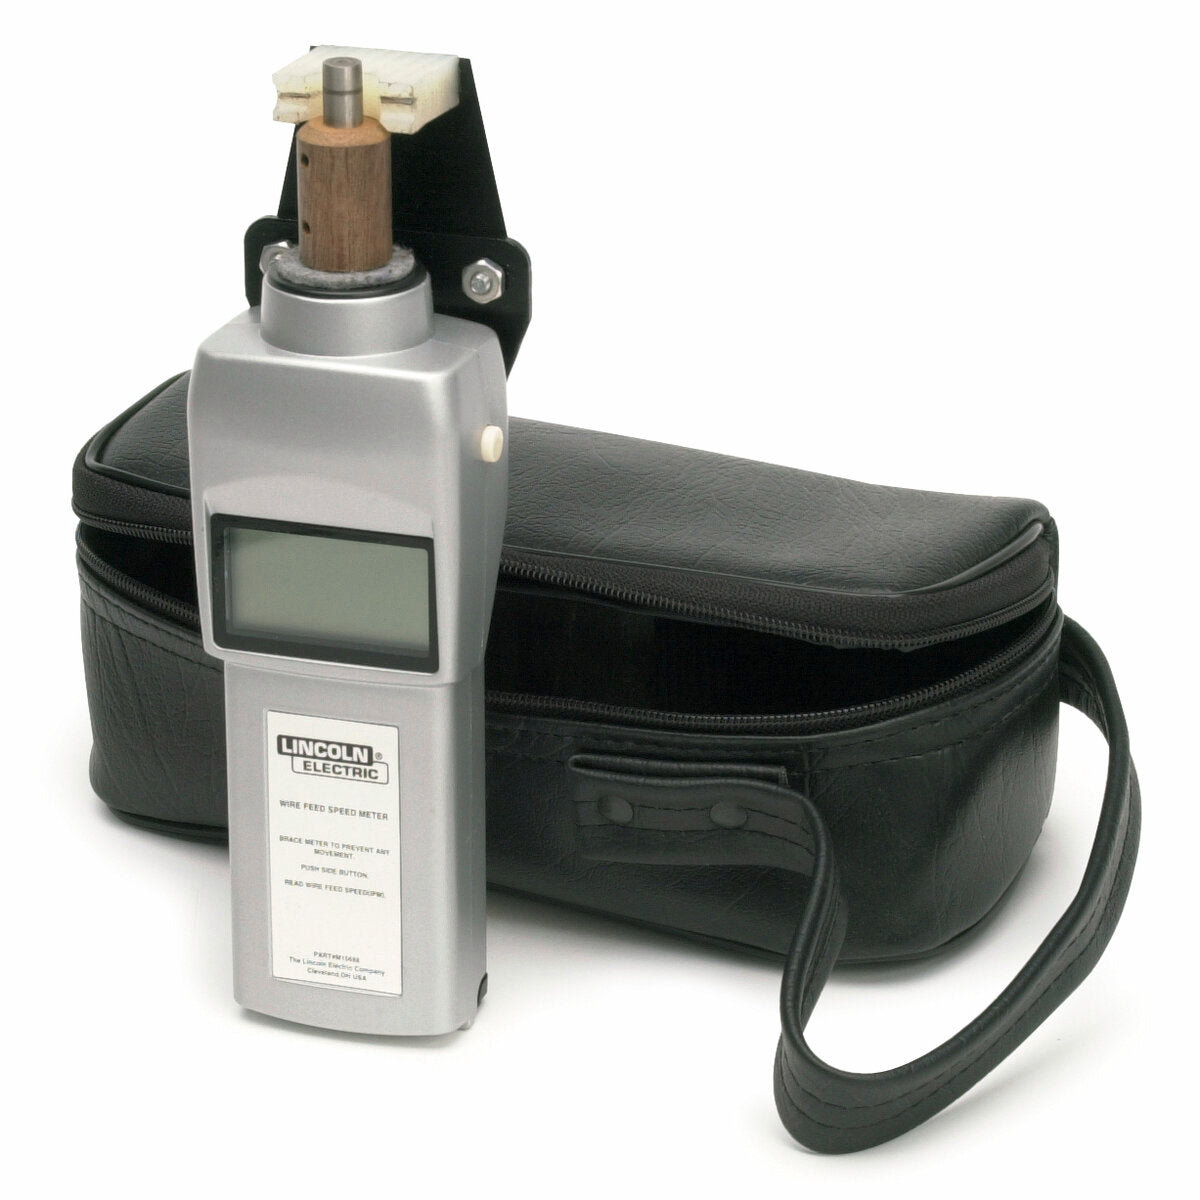 Lincoln Electric - Portable Digital WFS Meter - K283-1